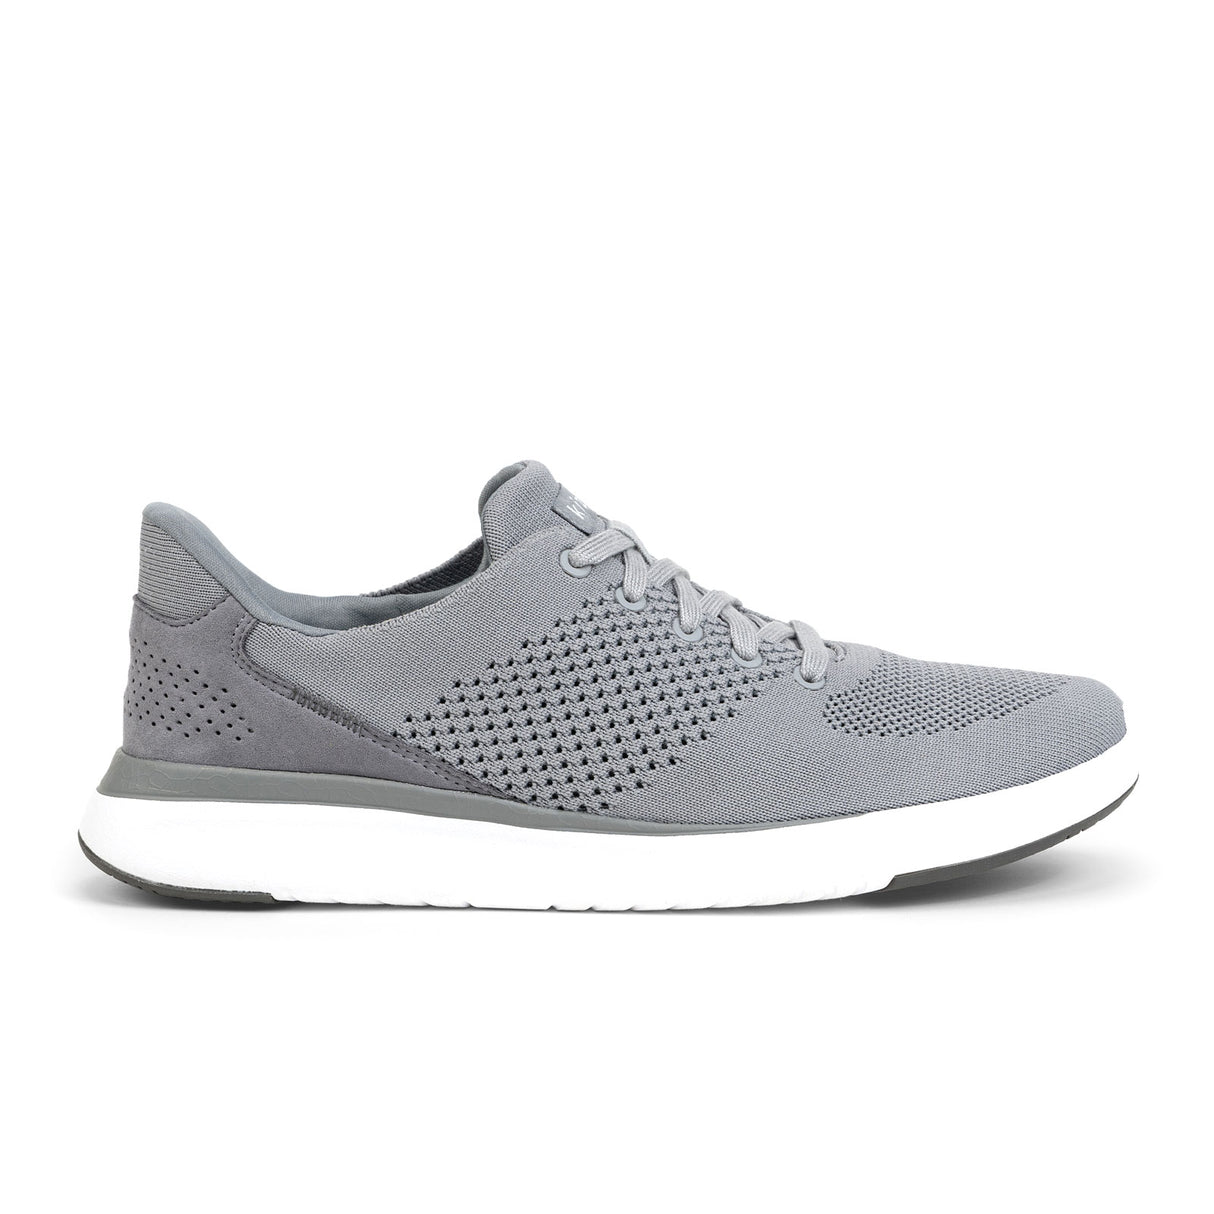 Kizik Lima Sneaker (Unisex) - Grey Athletic - Casual - Lace Up - The Heel Shoe Fitters